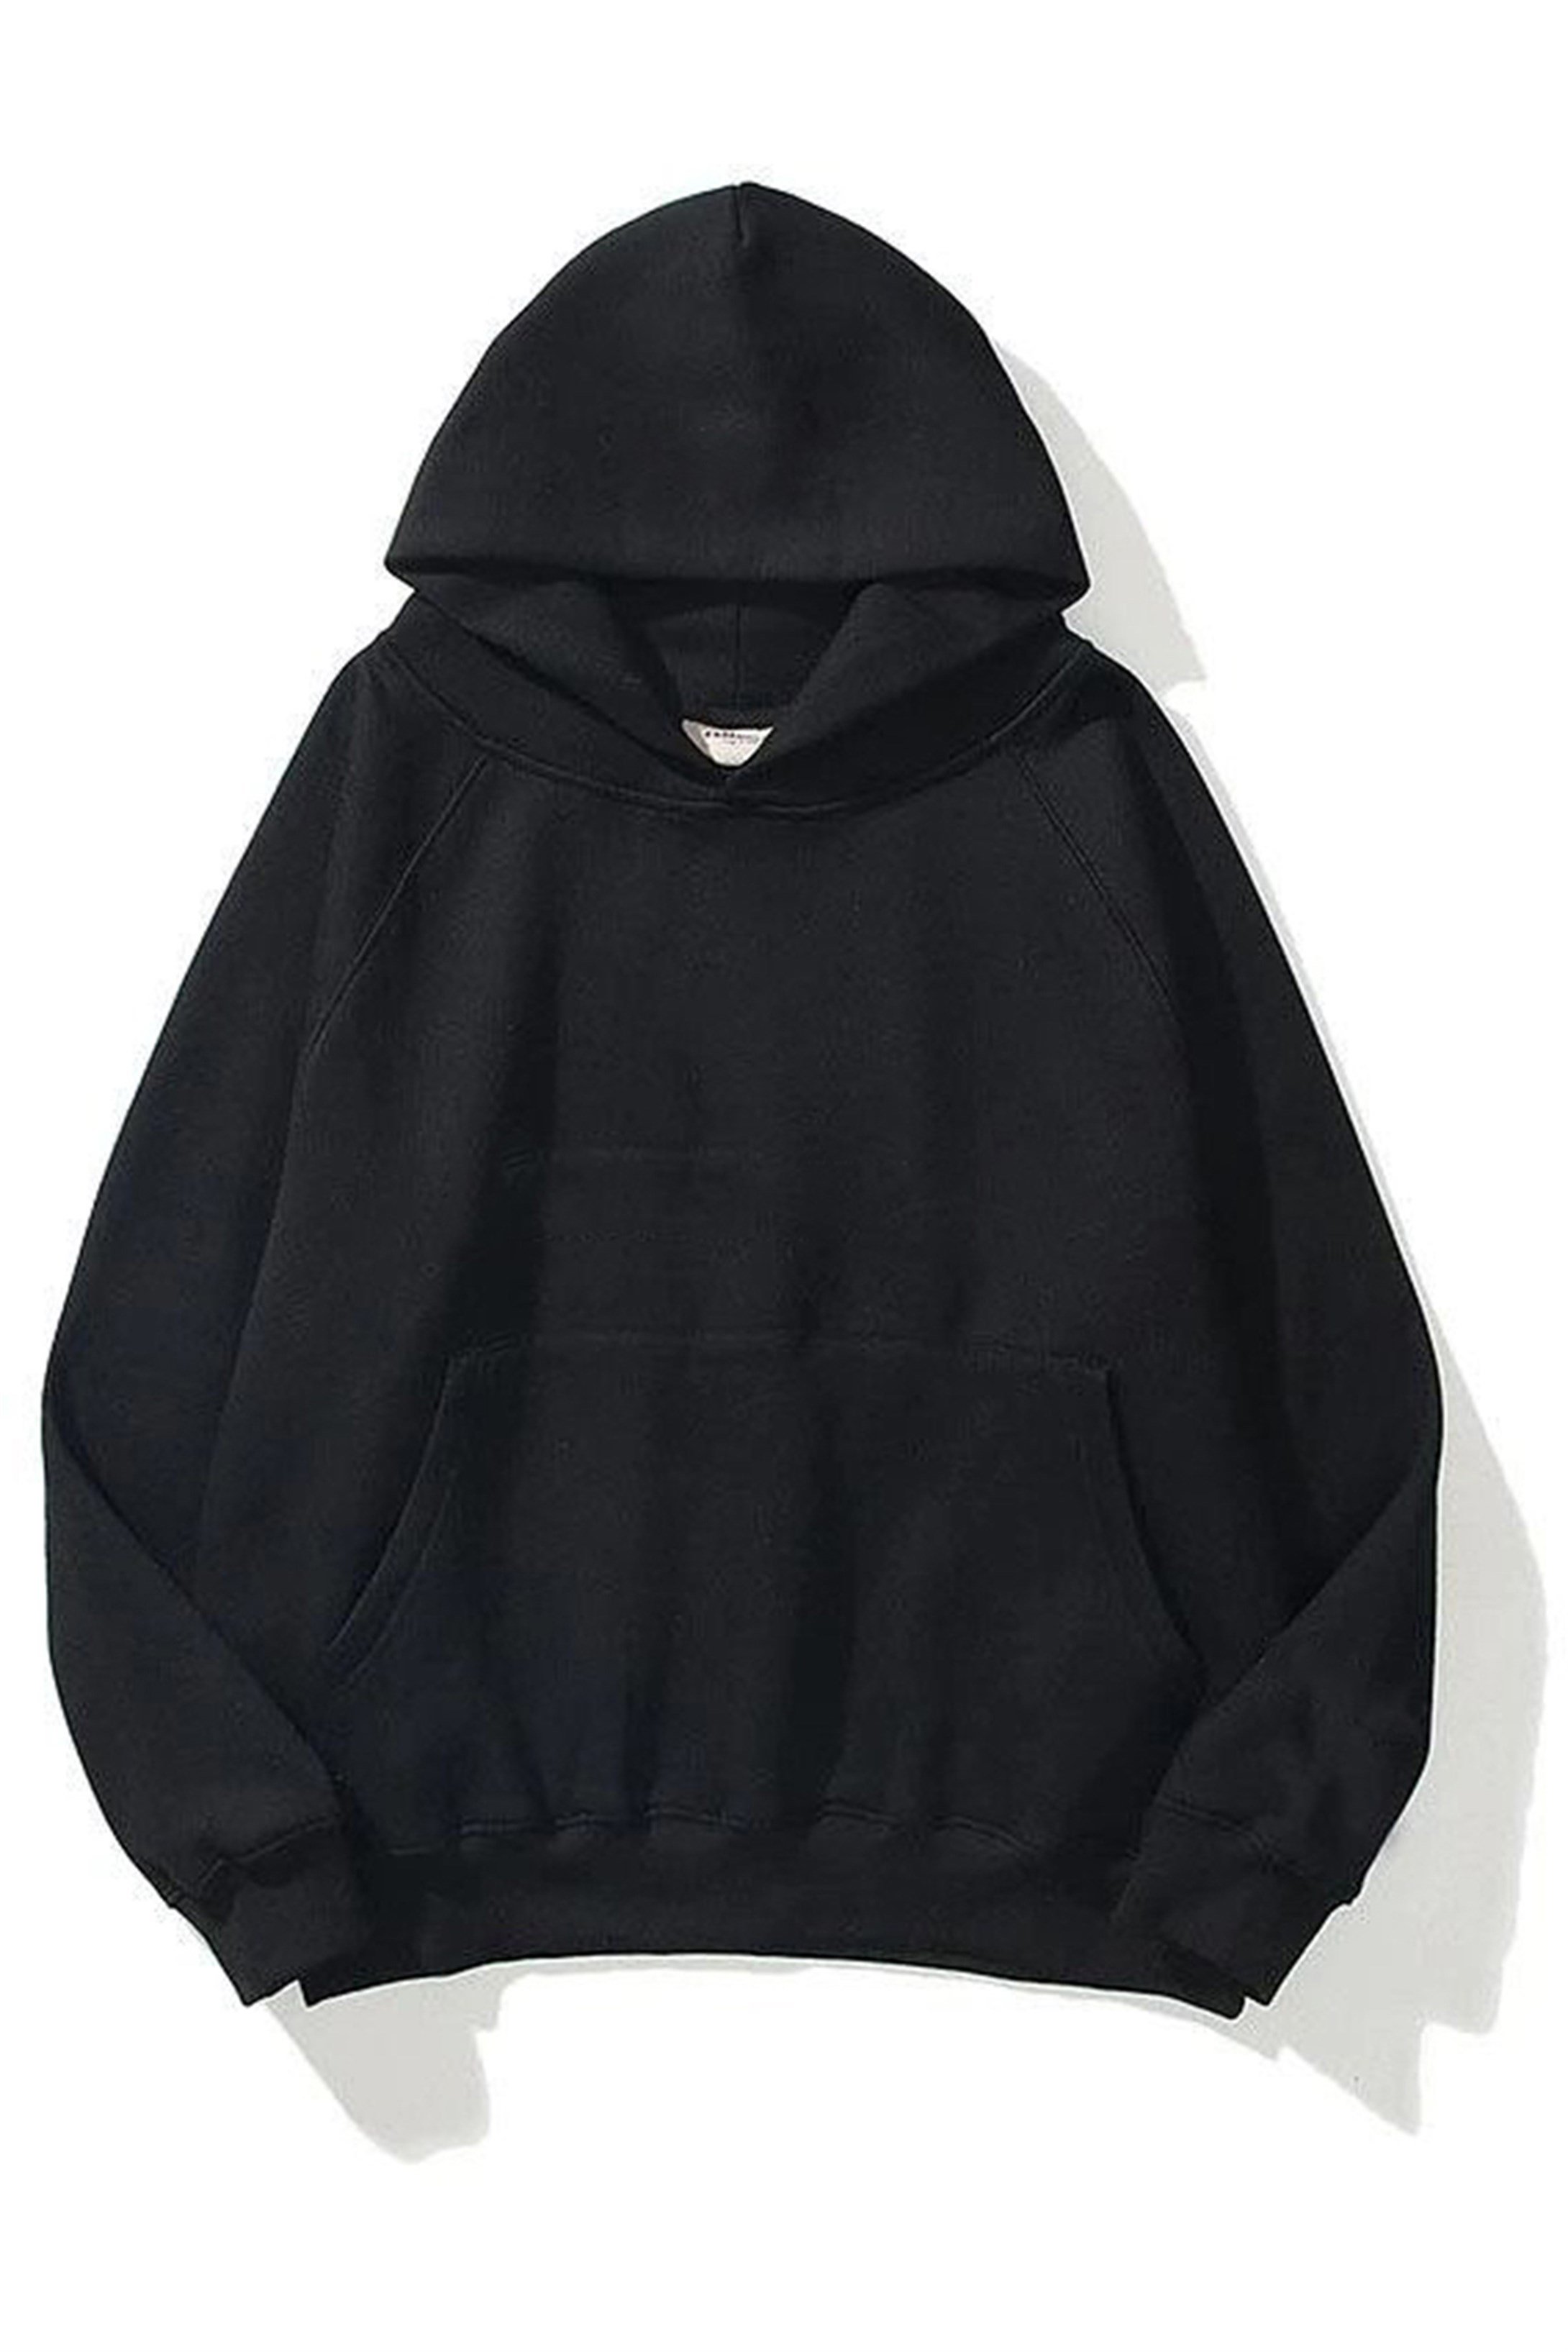 Trendiz Unisex Siyah Basic Sweatshirt Hoodie - Trendiz